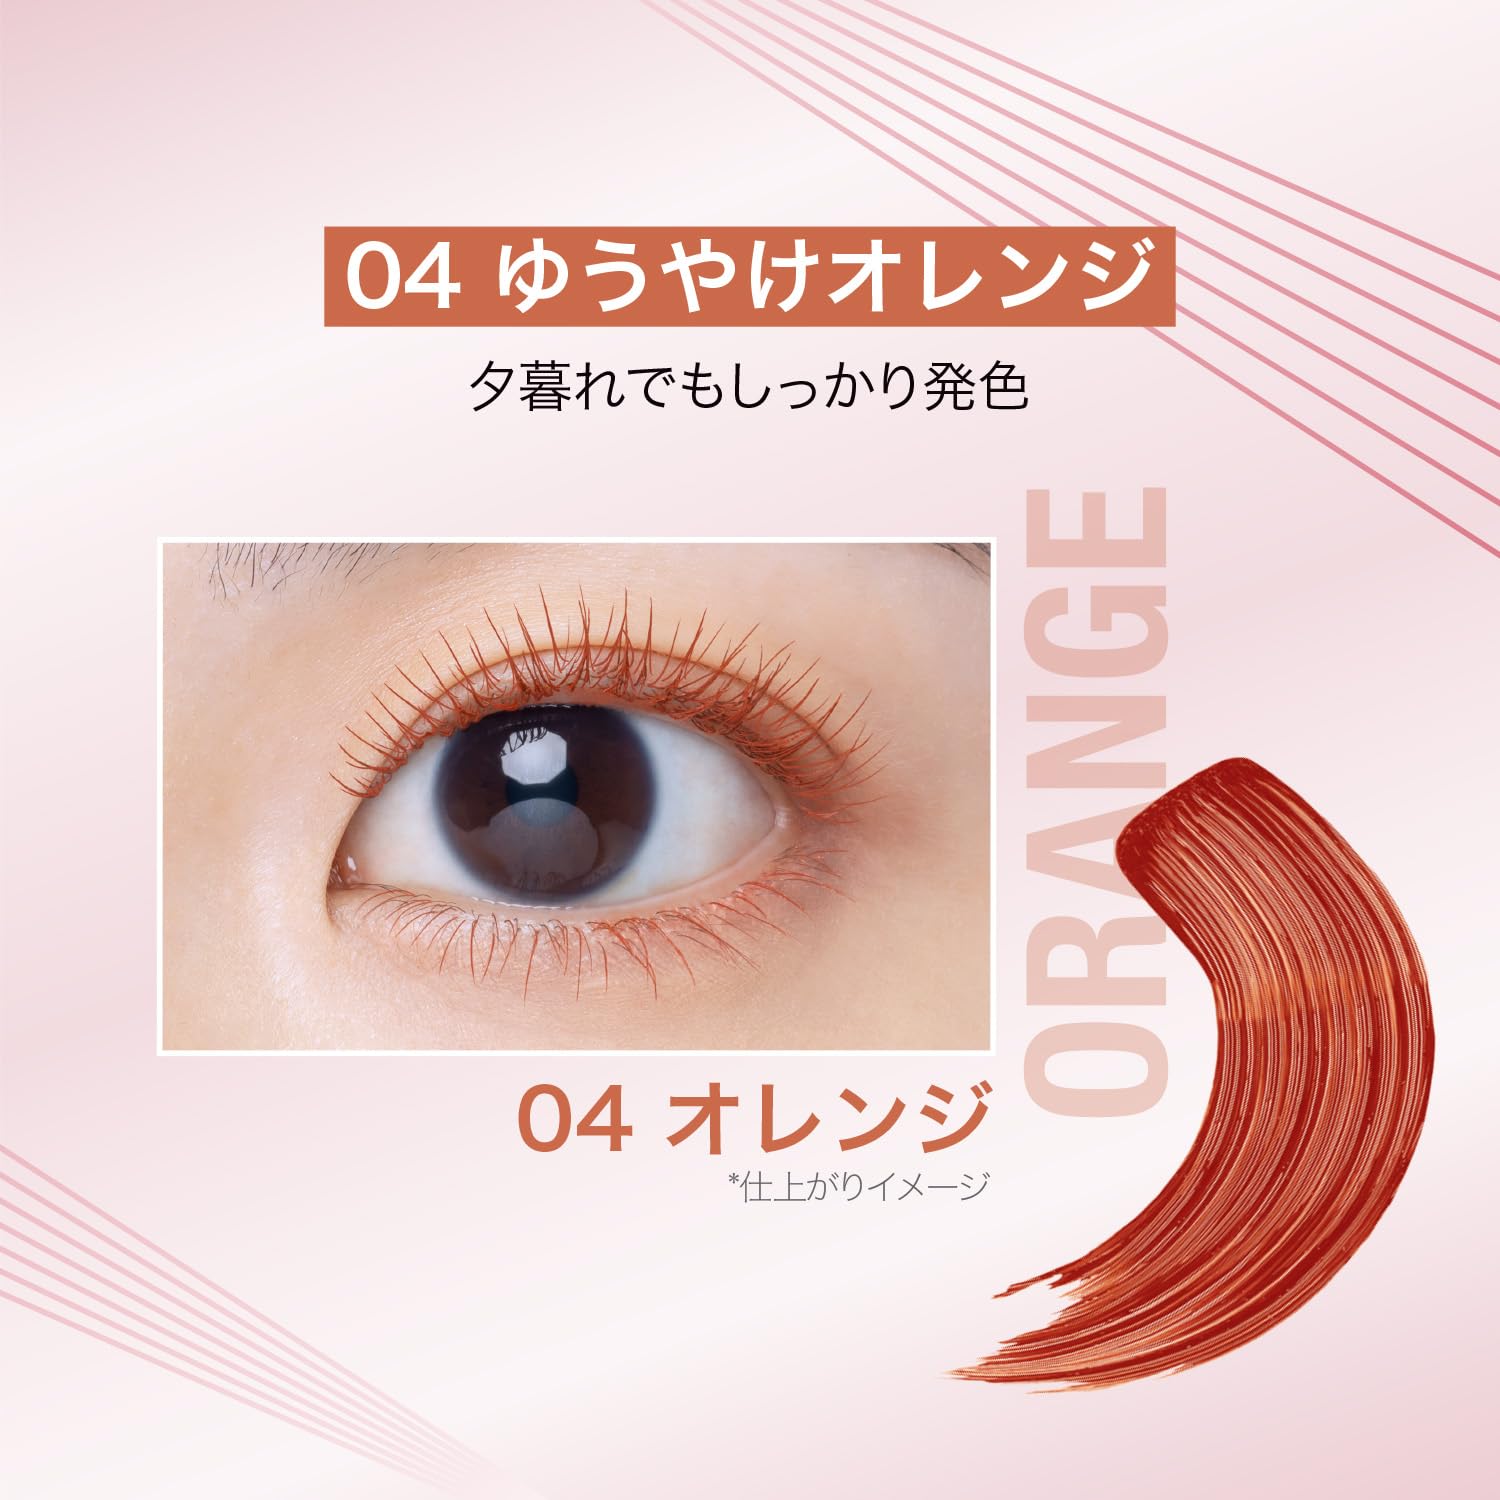 Marulala Marula Essence Moisturizing 20ml - Perfect Japanese Beauty Oil Brands